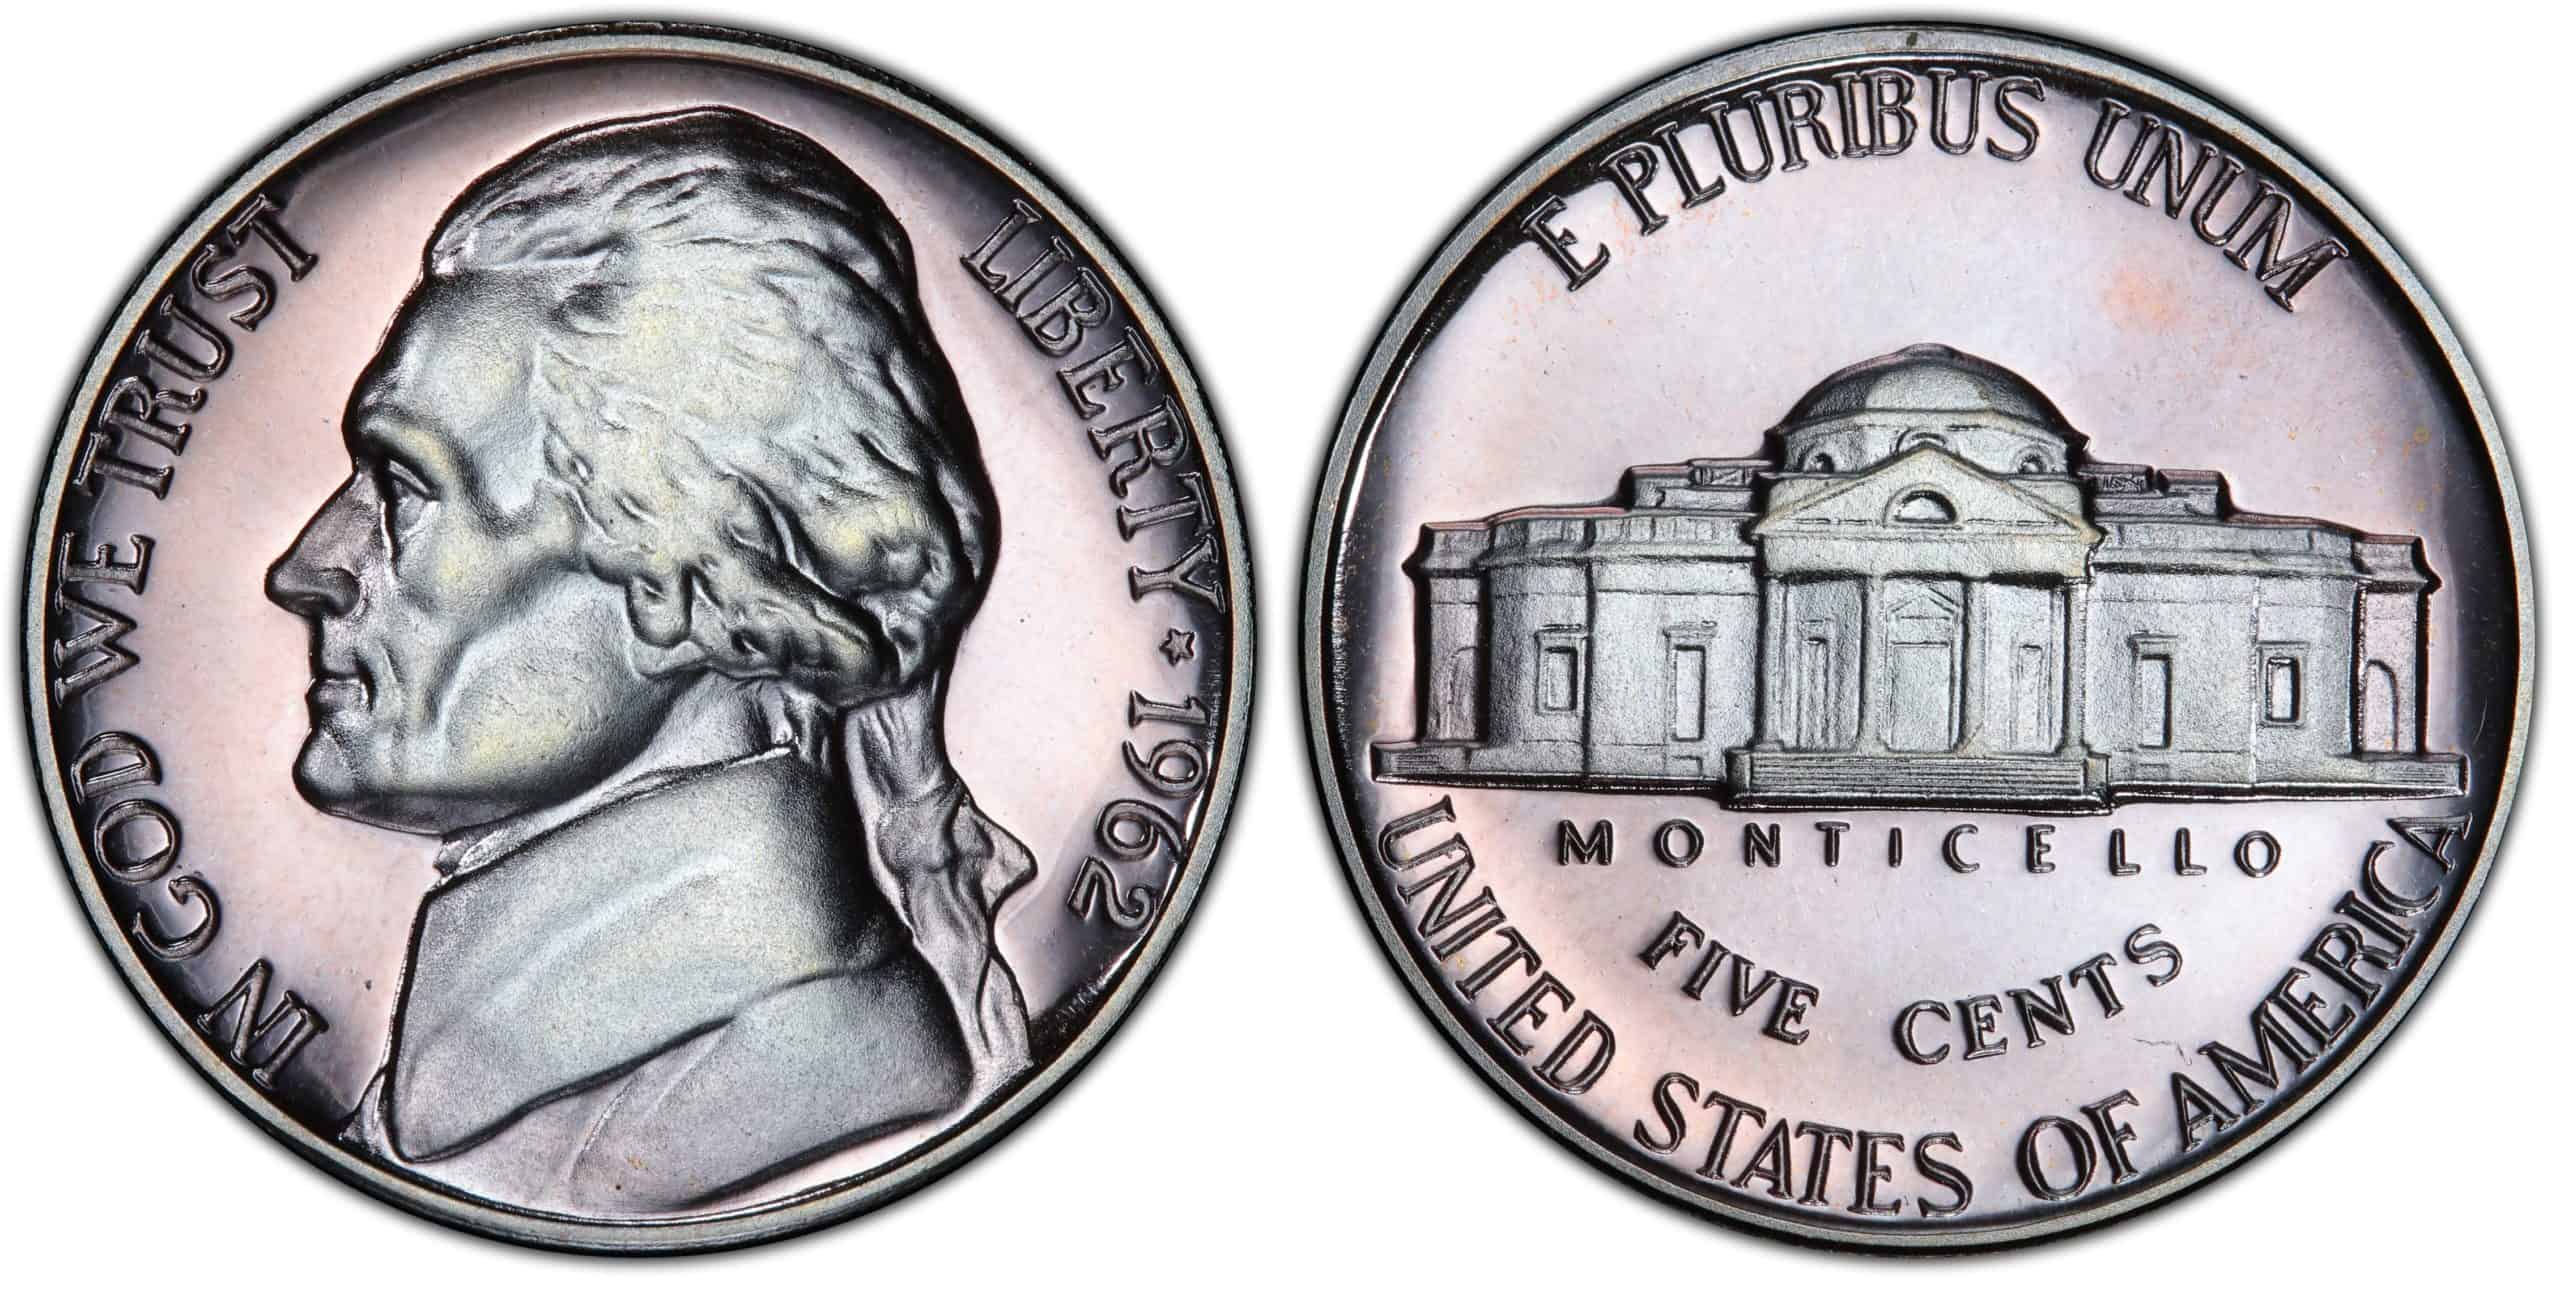 1962 proof Jefferson nickel